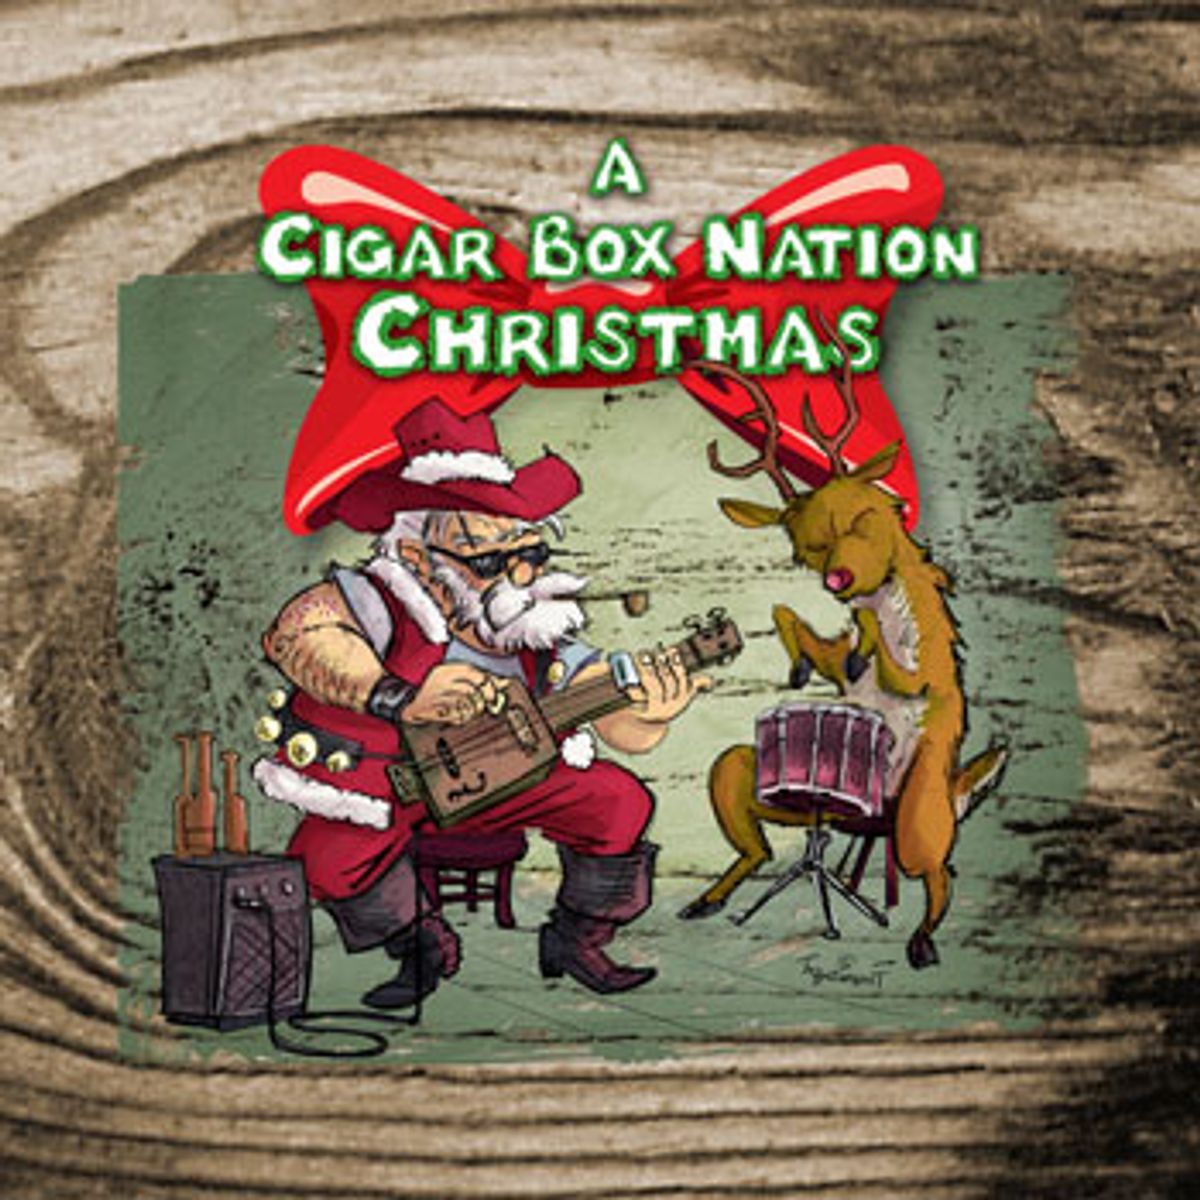 Cigar Box Nation Posts Free Christmas Album